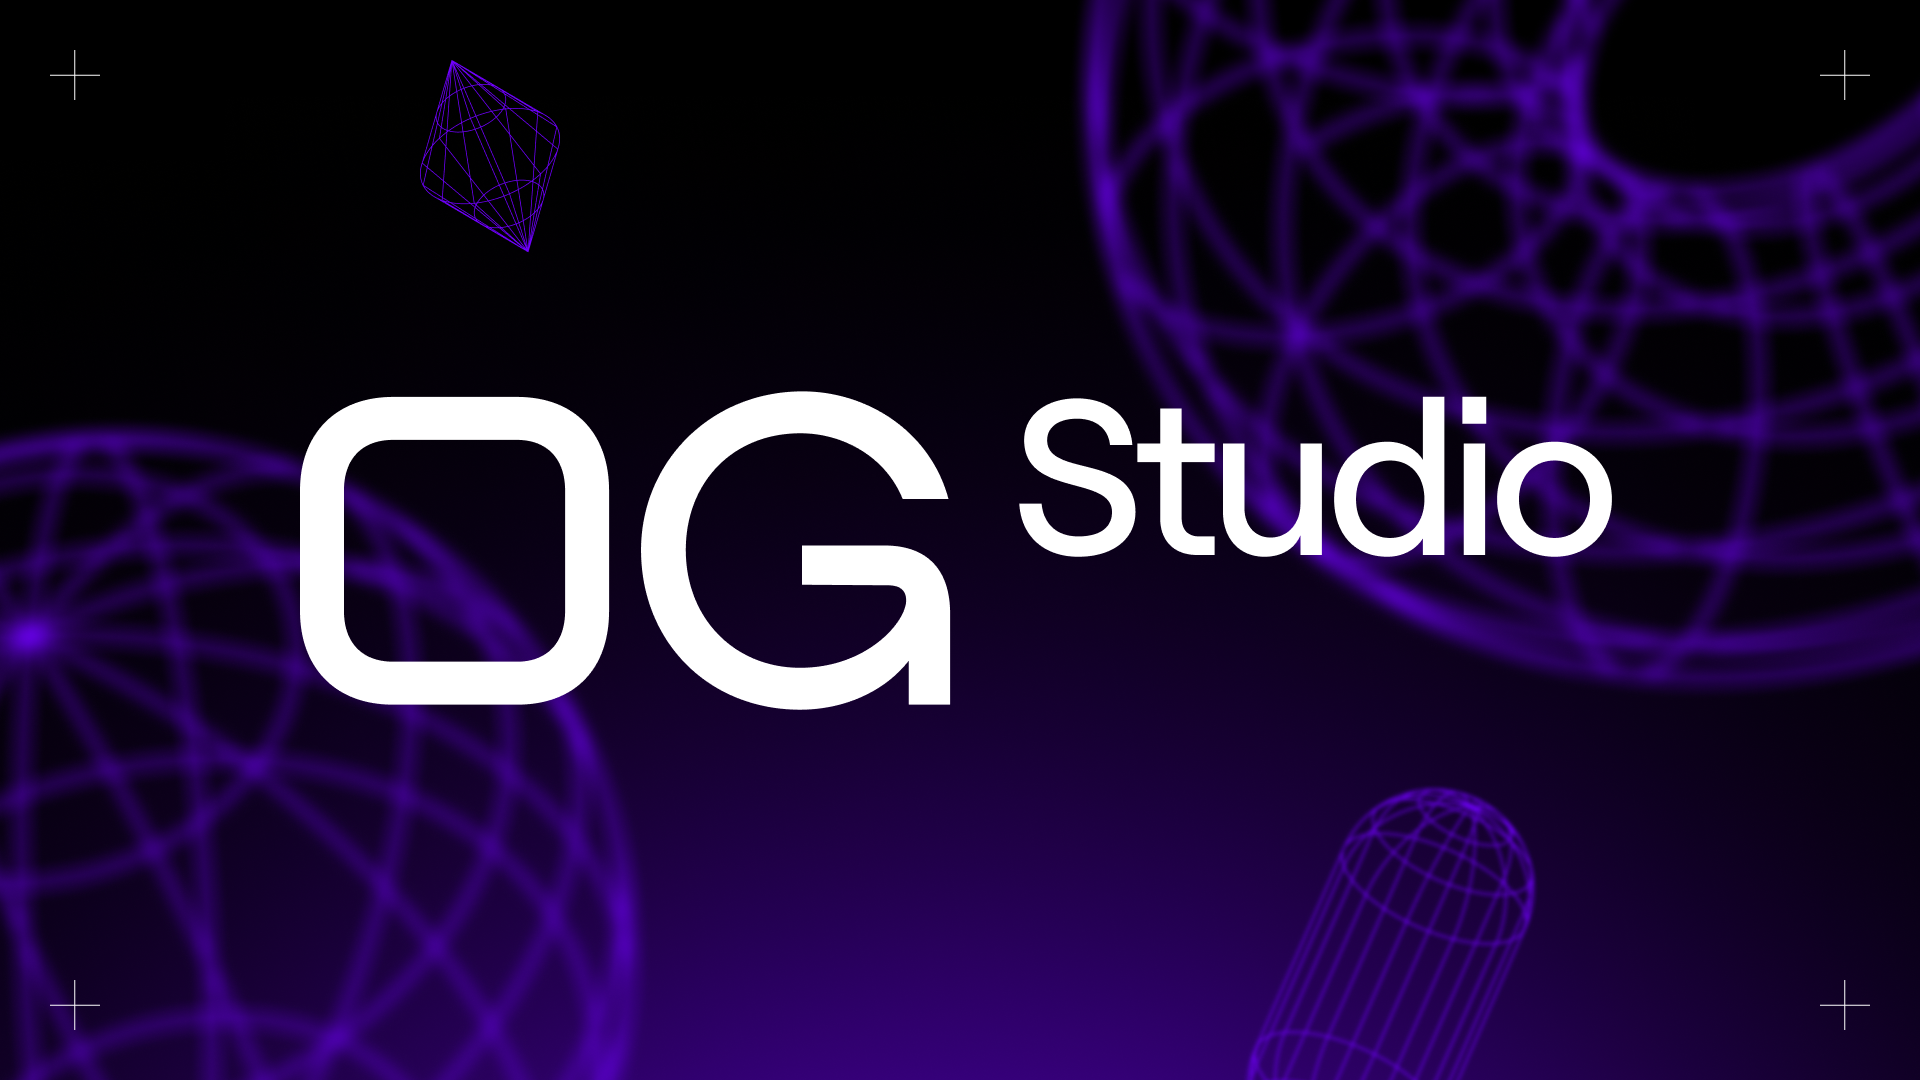 Meet OG Studio - Powerful Tools for Digital Artists